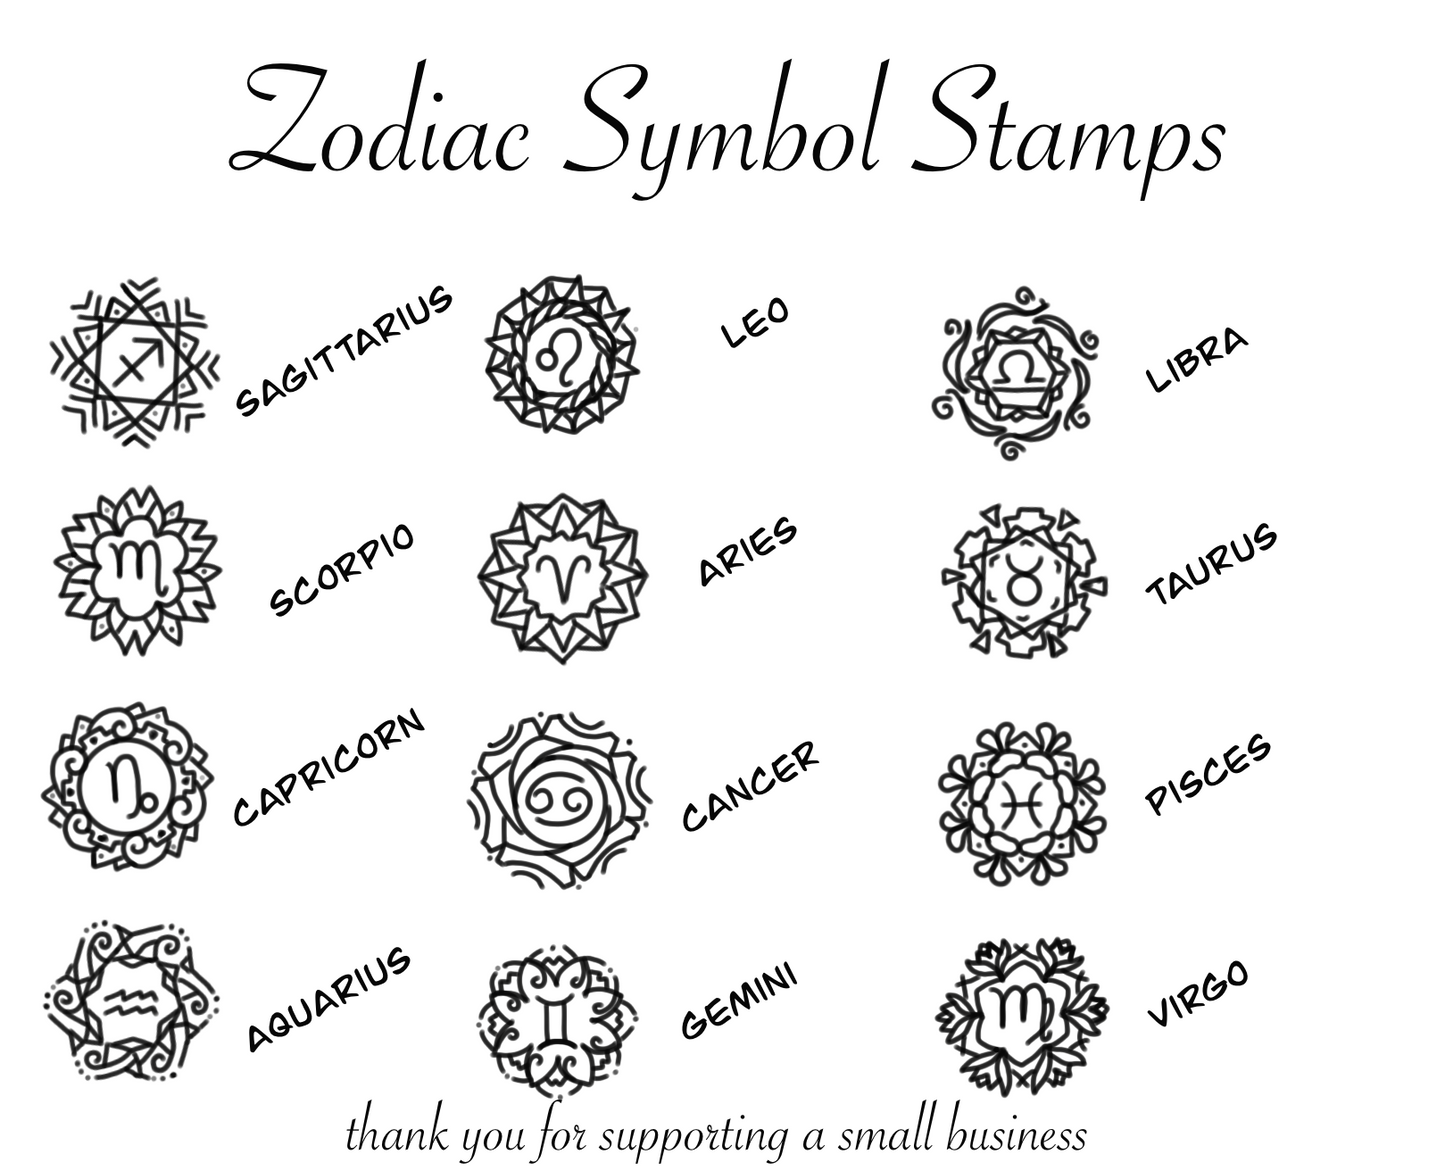 Zodiac Stamped Pendant